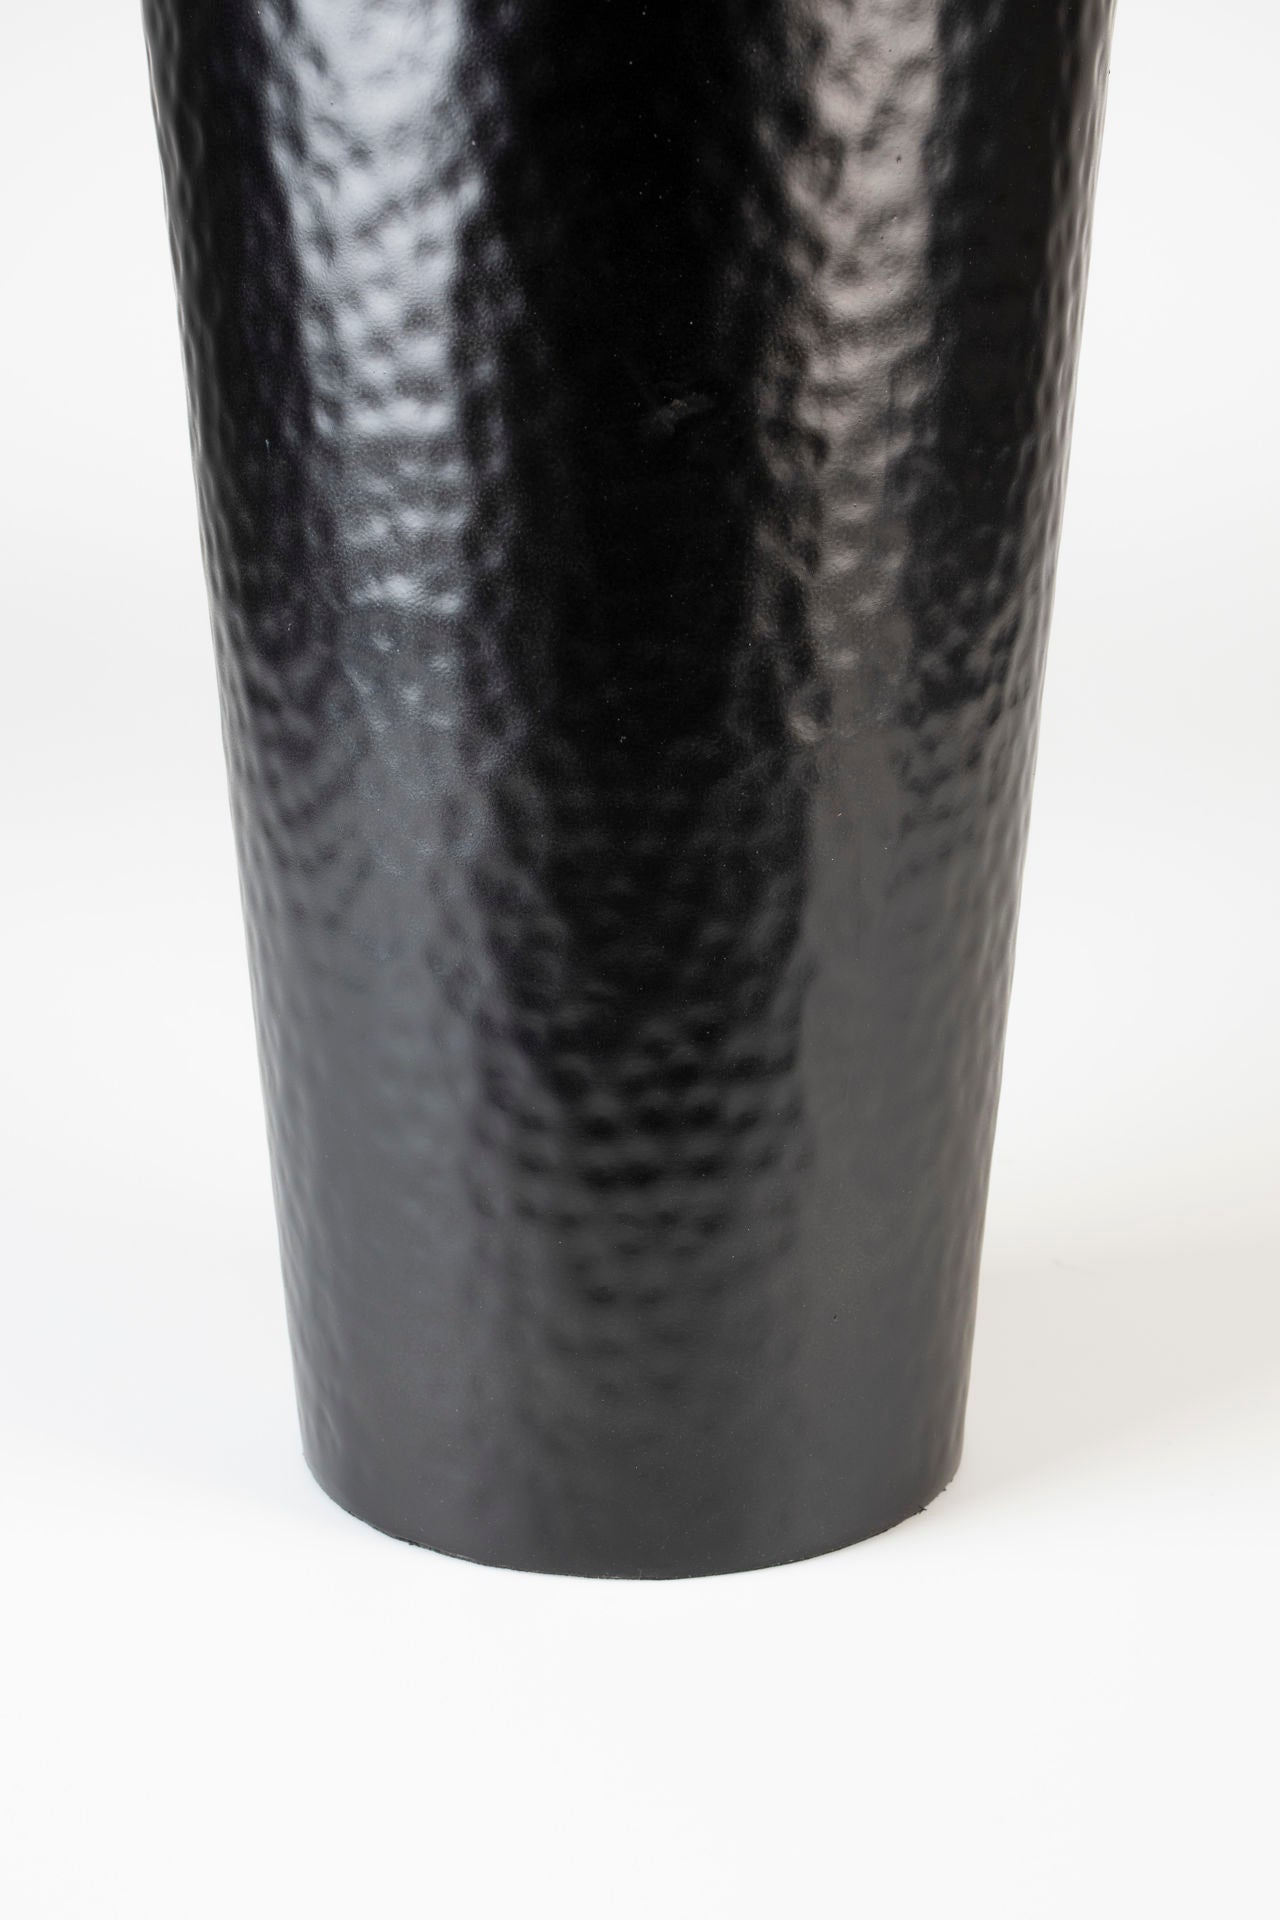 Nancy's Rosaryville Vase - Antique - Black - Steel - 20 cm x 20 cm x 56 cm